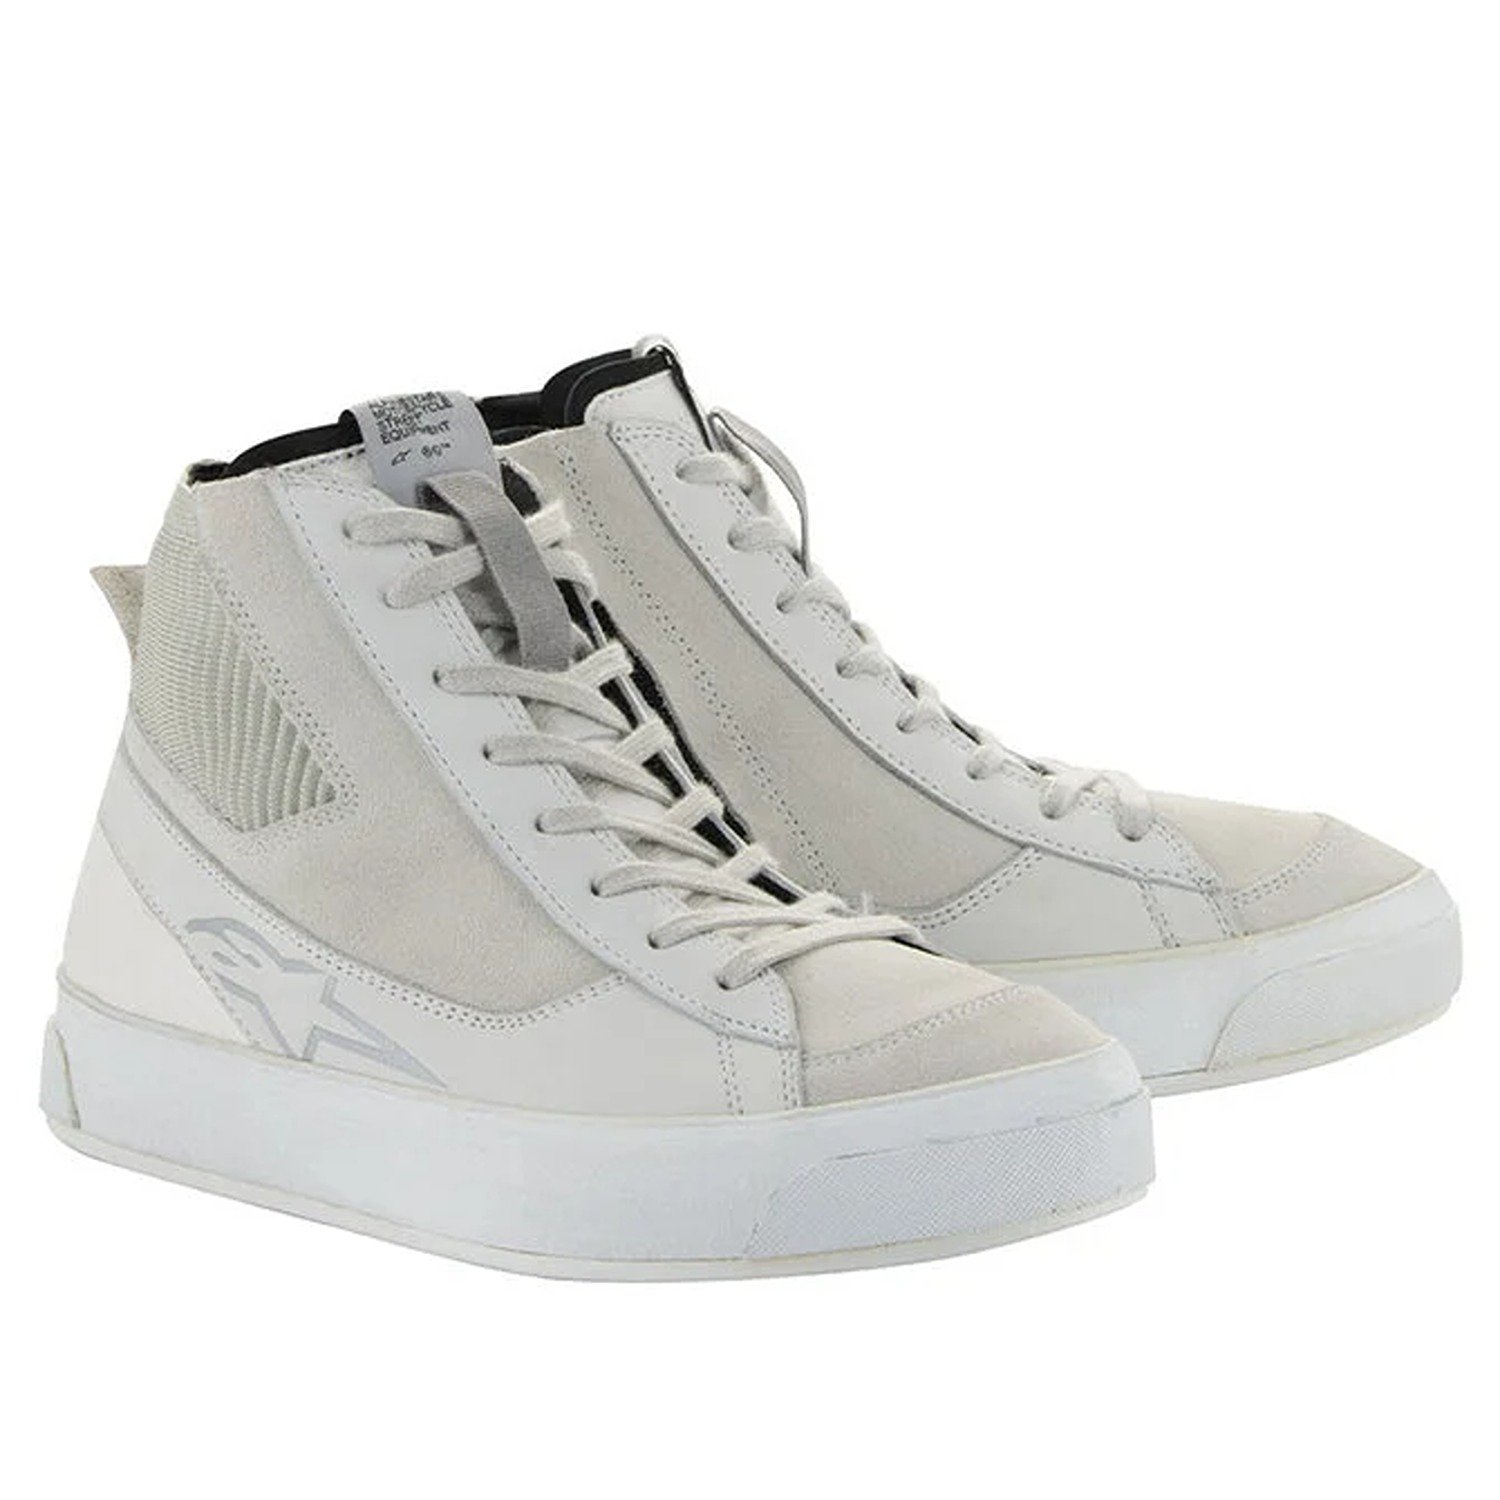 Image of Alpinestars Stella Stated Podium Shoes White Cool Gray Talla US 95